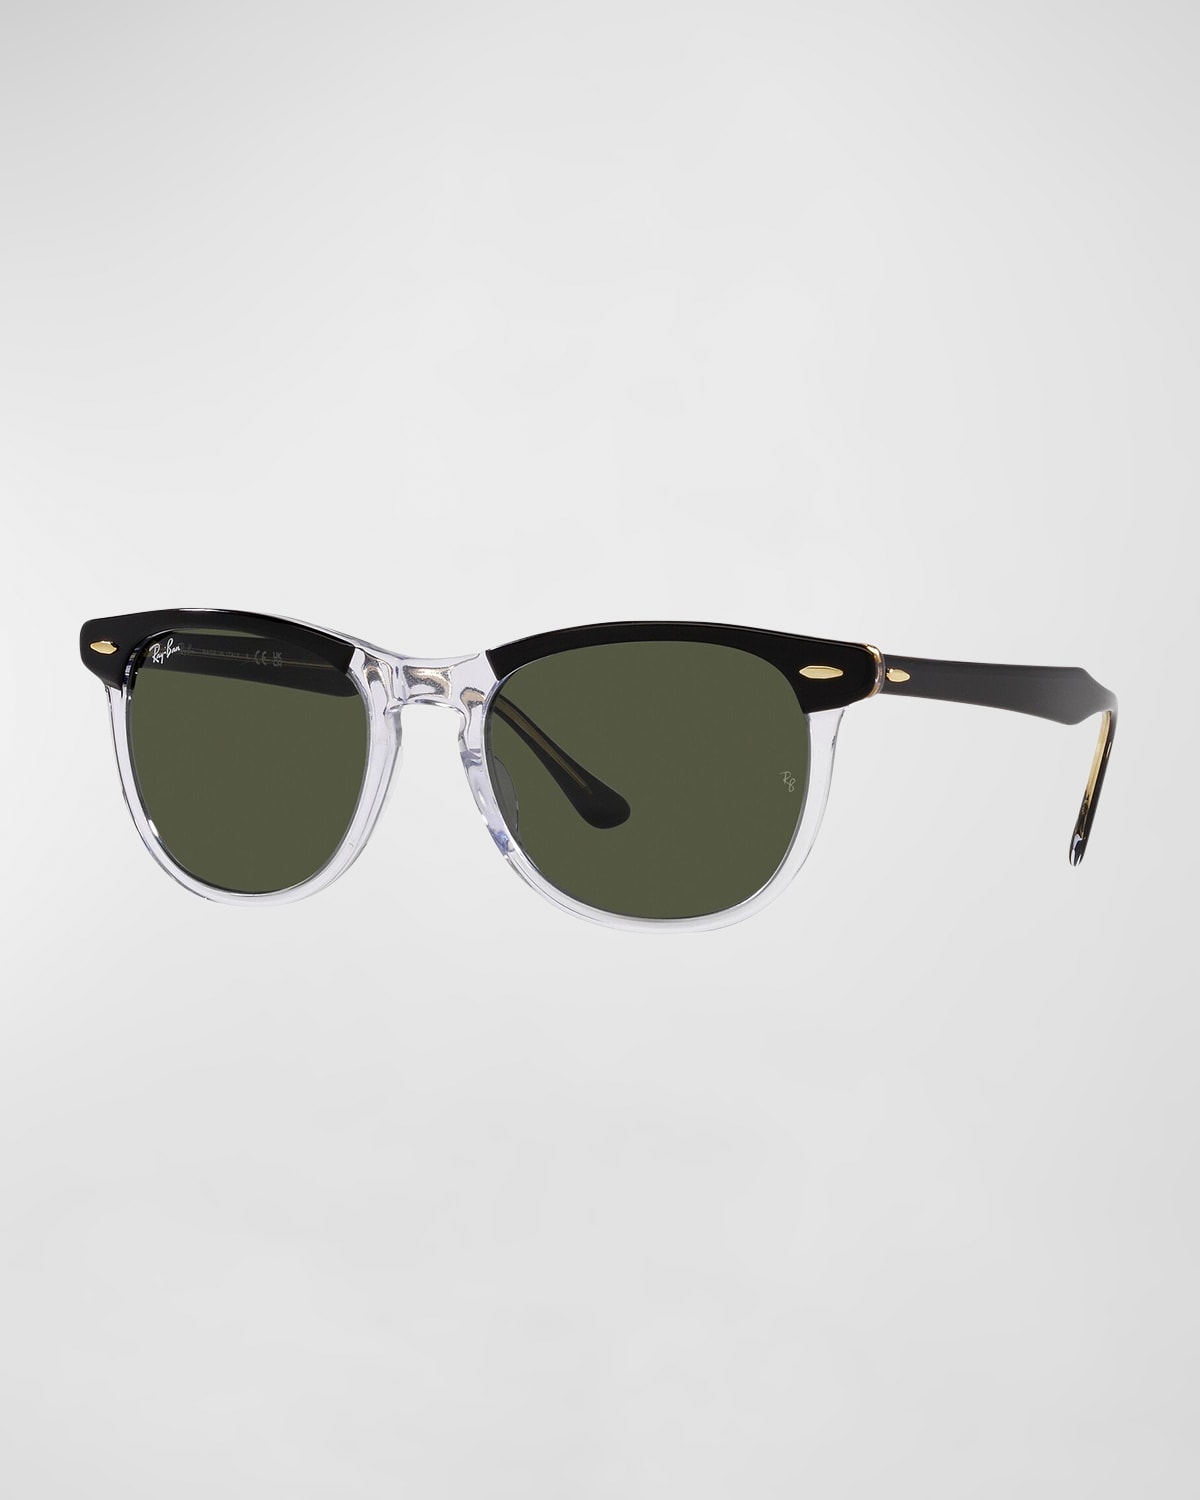 Ray Ban Sunglasses Unisex Eagle Eye - Black On Transparent Frame Green Lenses 56-21